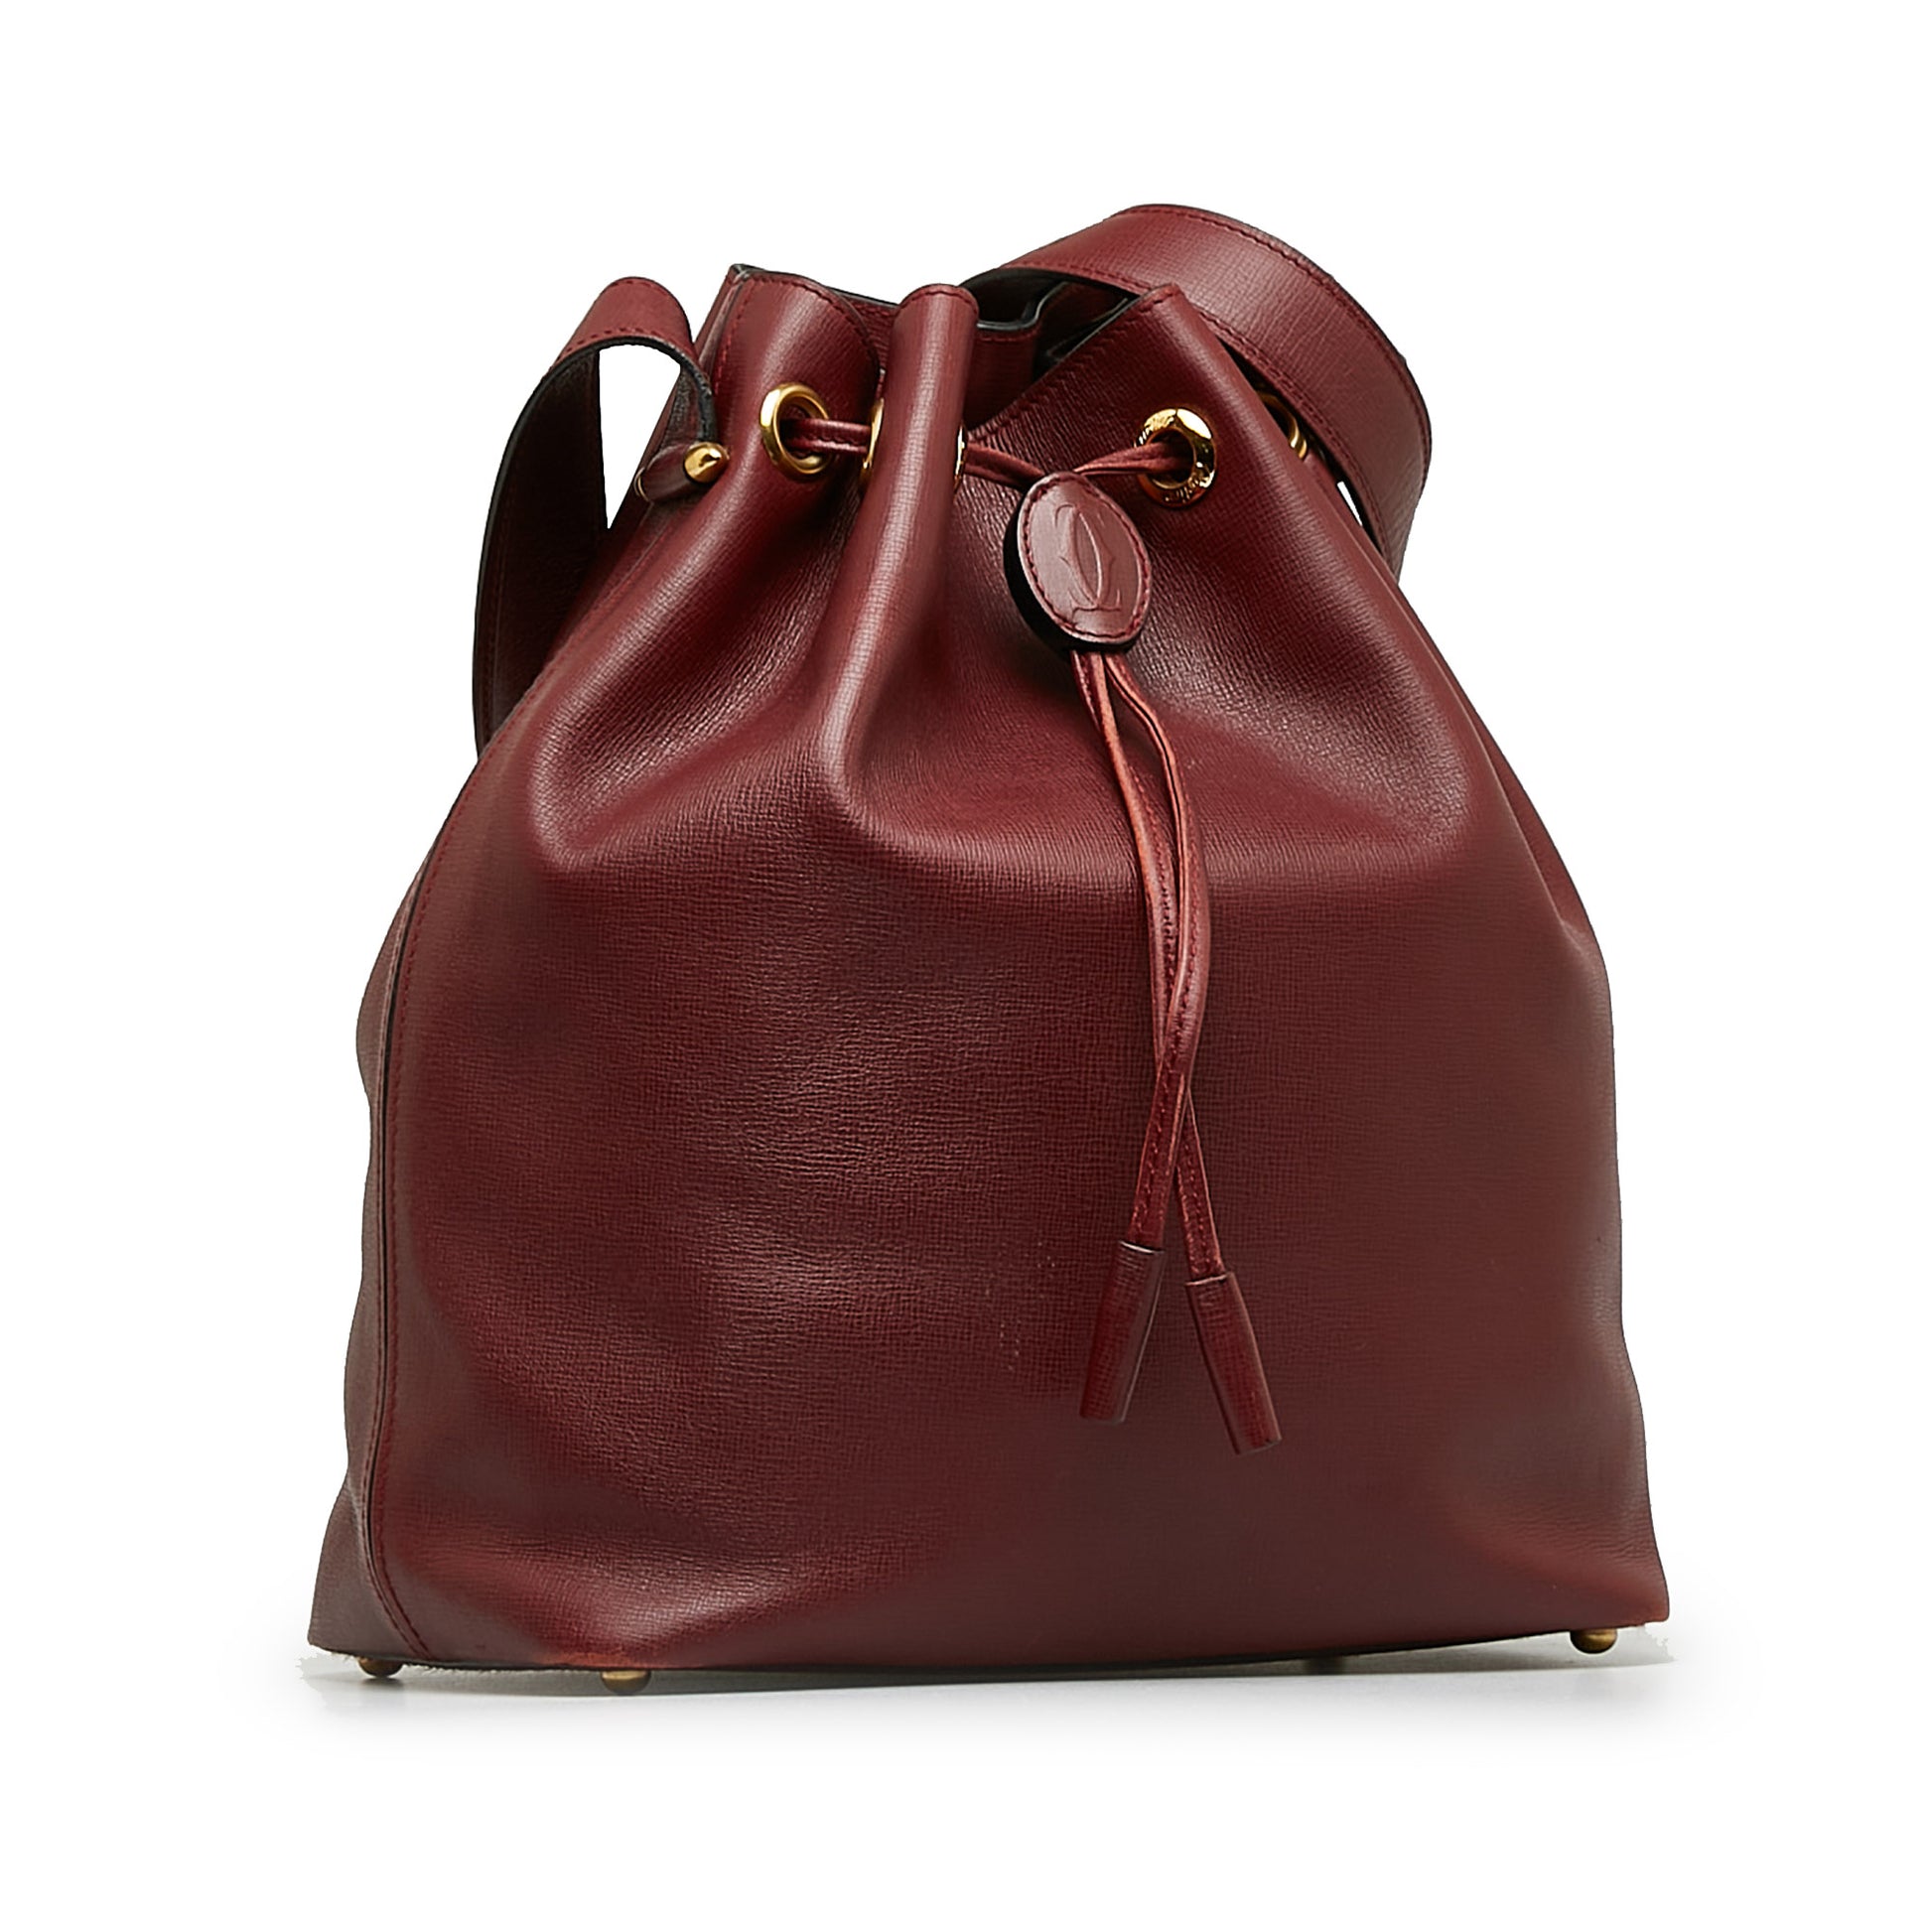 Must de Cartier Bucket Bag Red - Gaby Paris